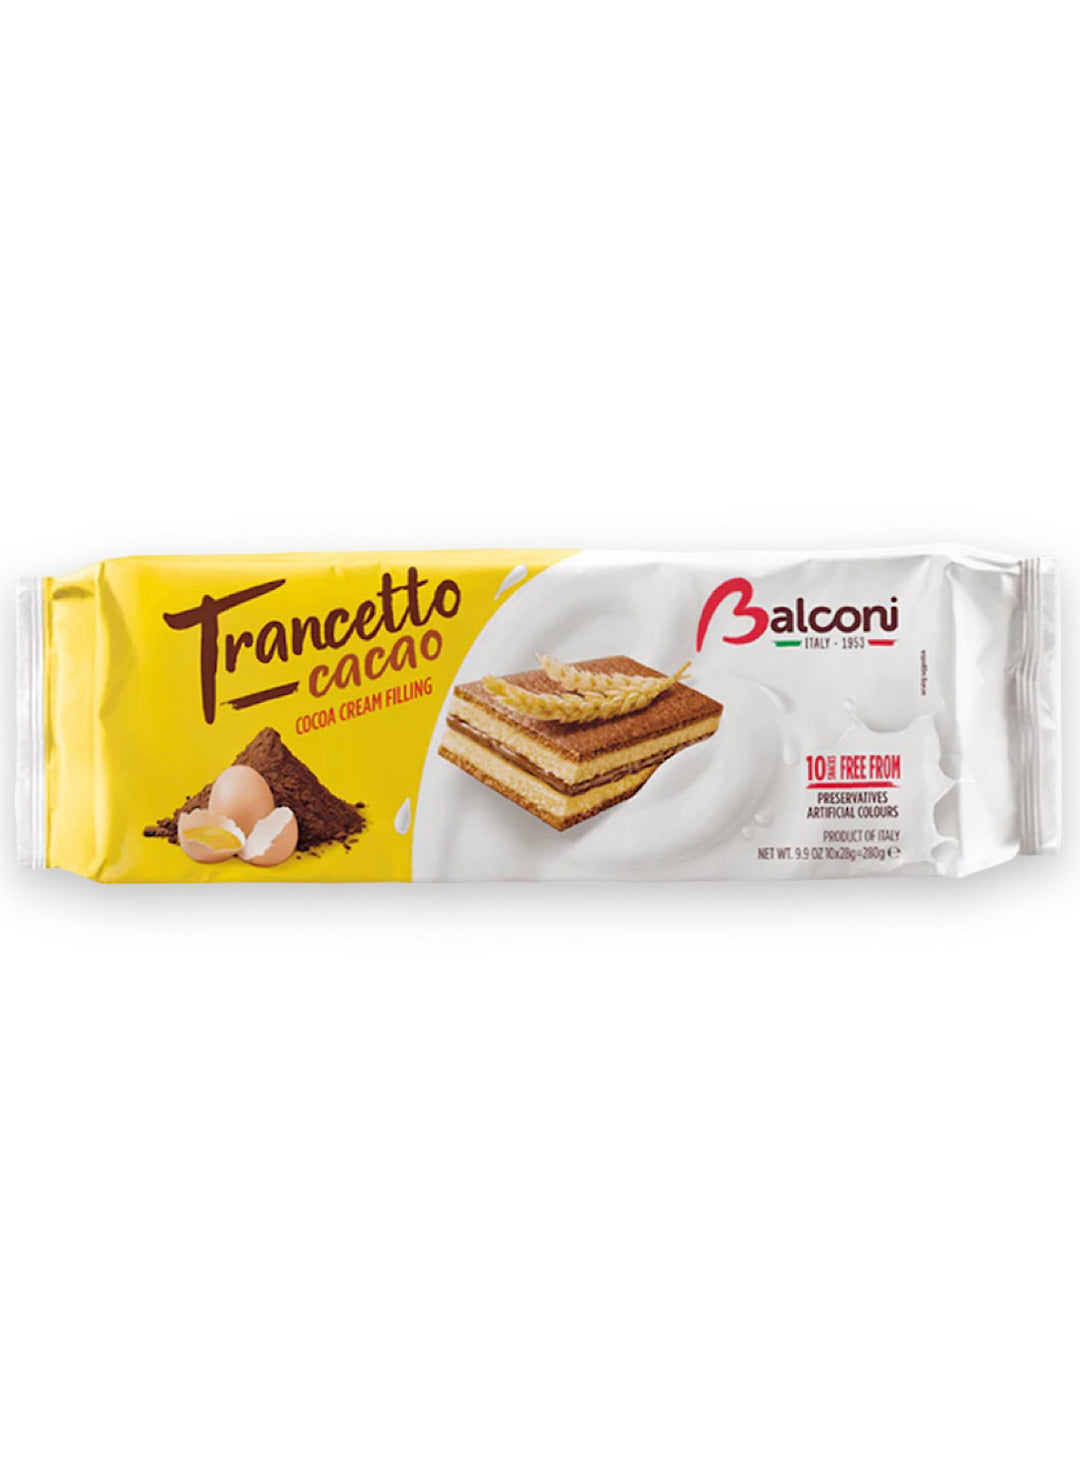 Tiramisu Cocoa Snack Cakes - Balconi - 300g